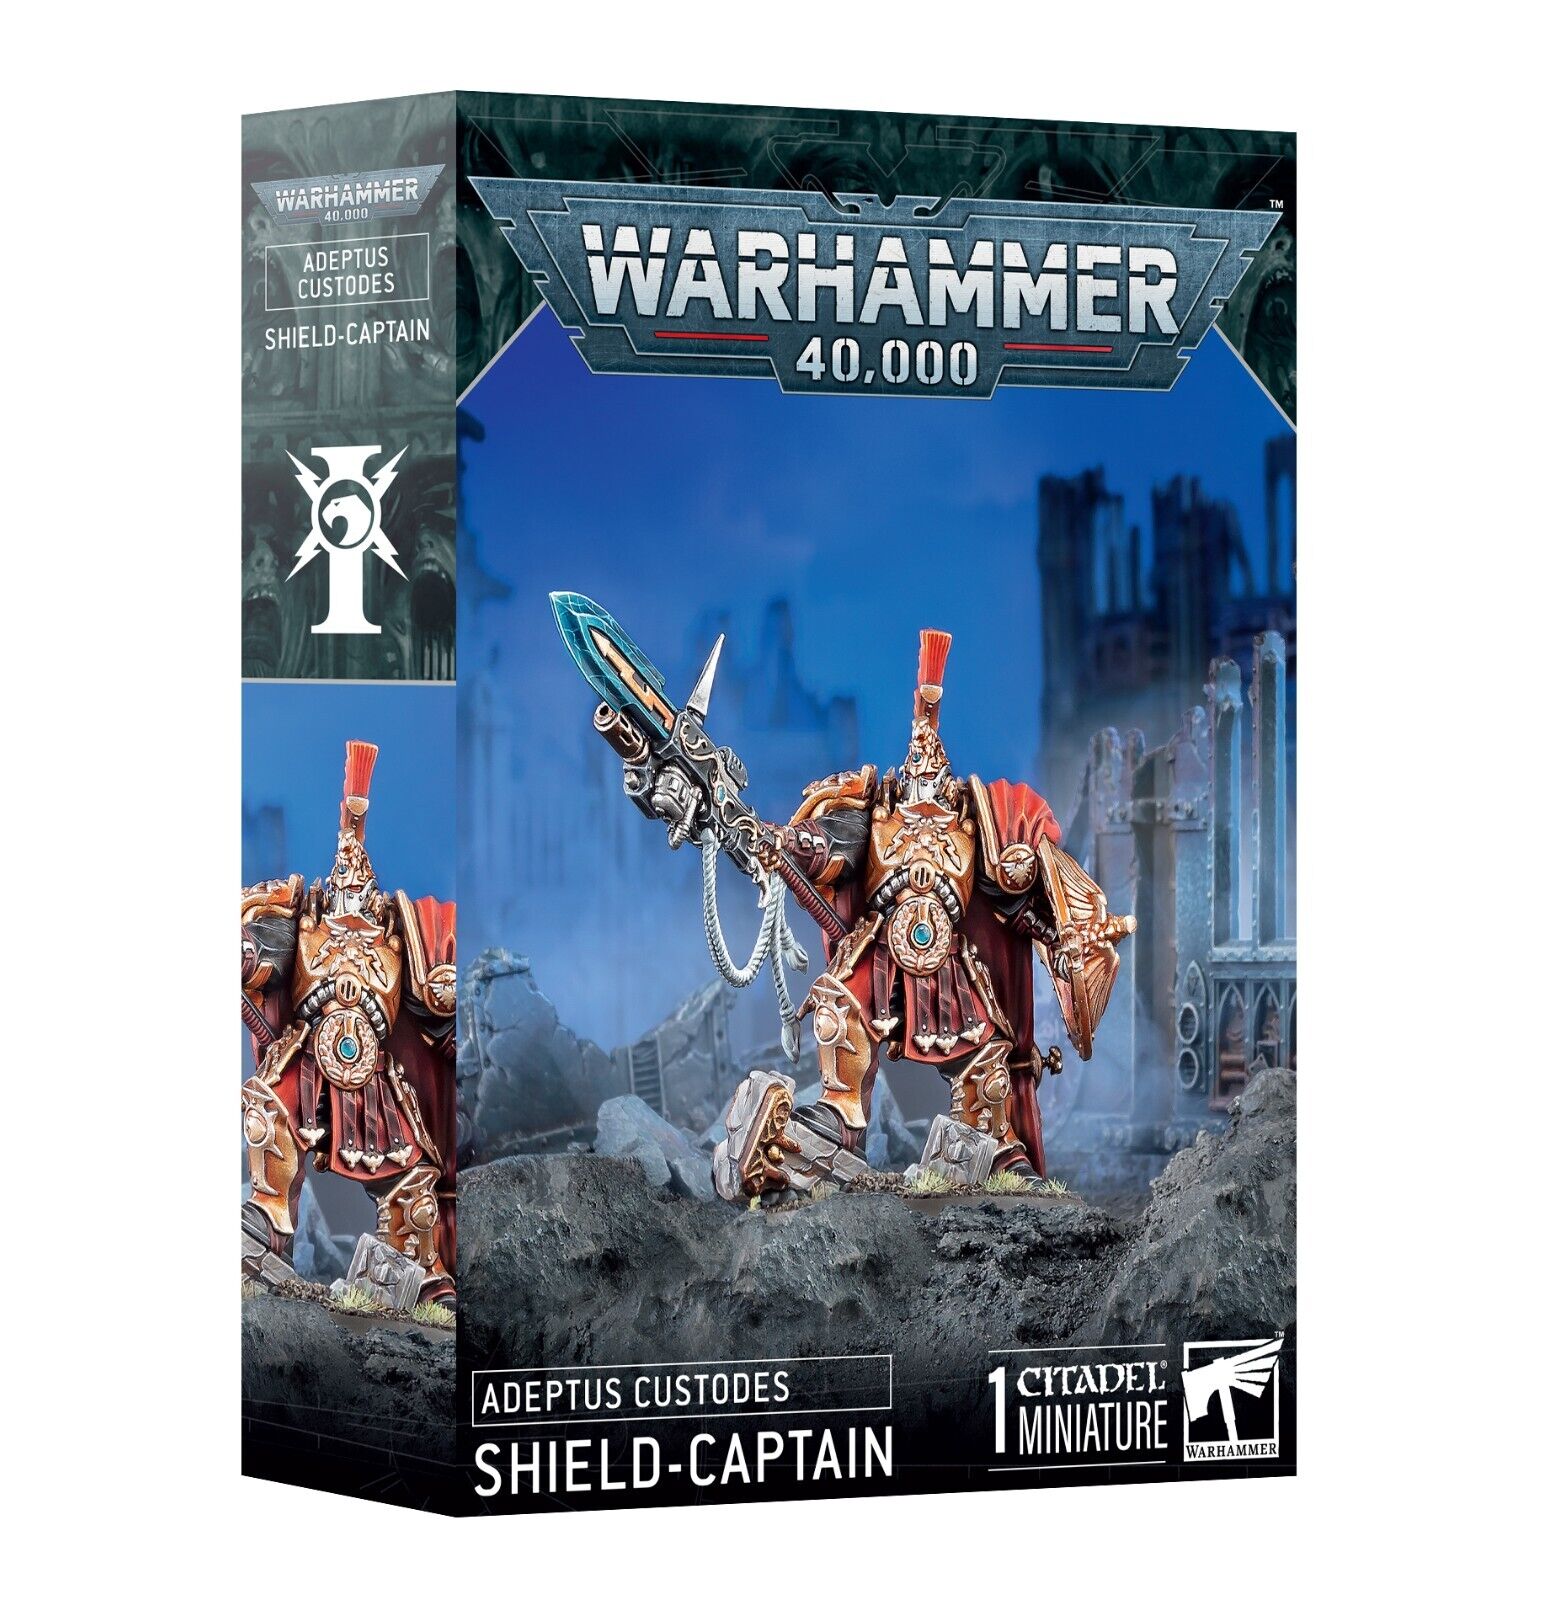 Warhammer 40k Adeptus Custodes: Shield-Captain  NEW in Box